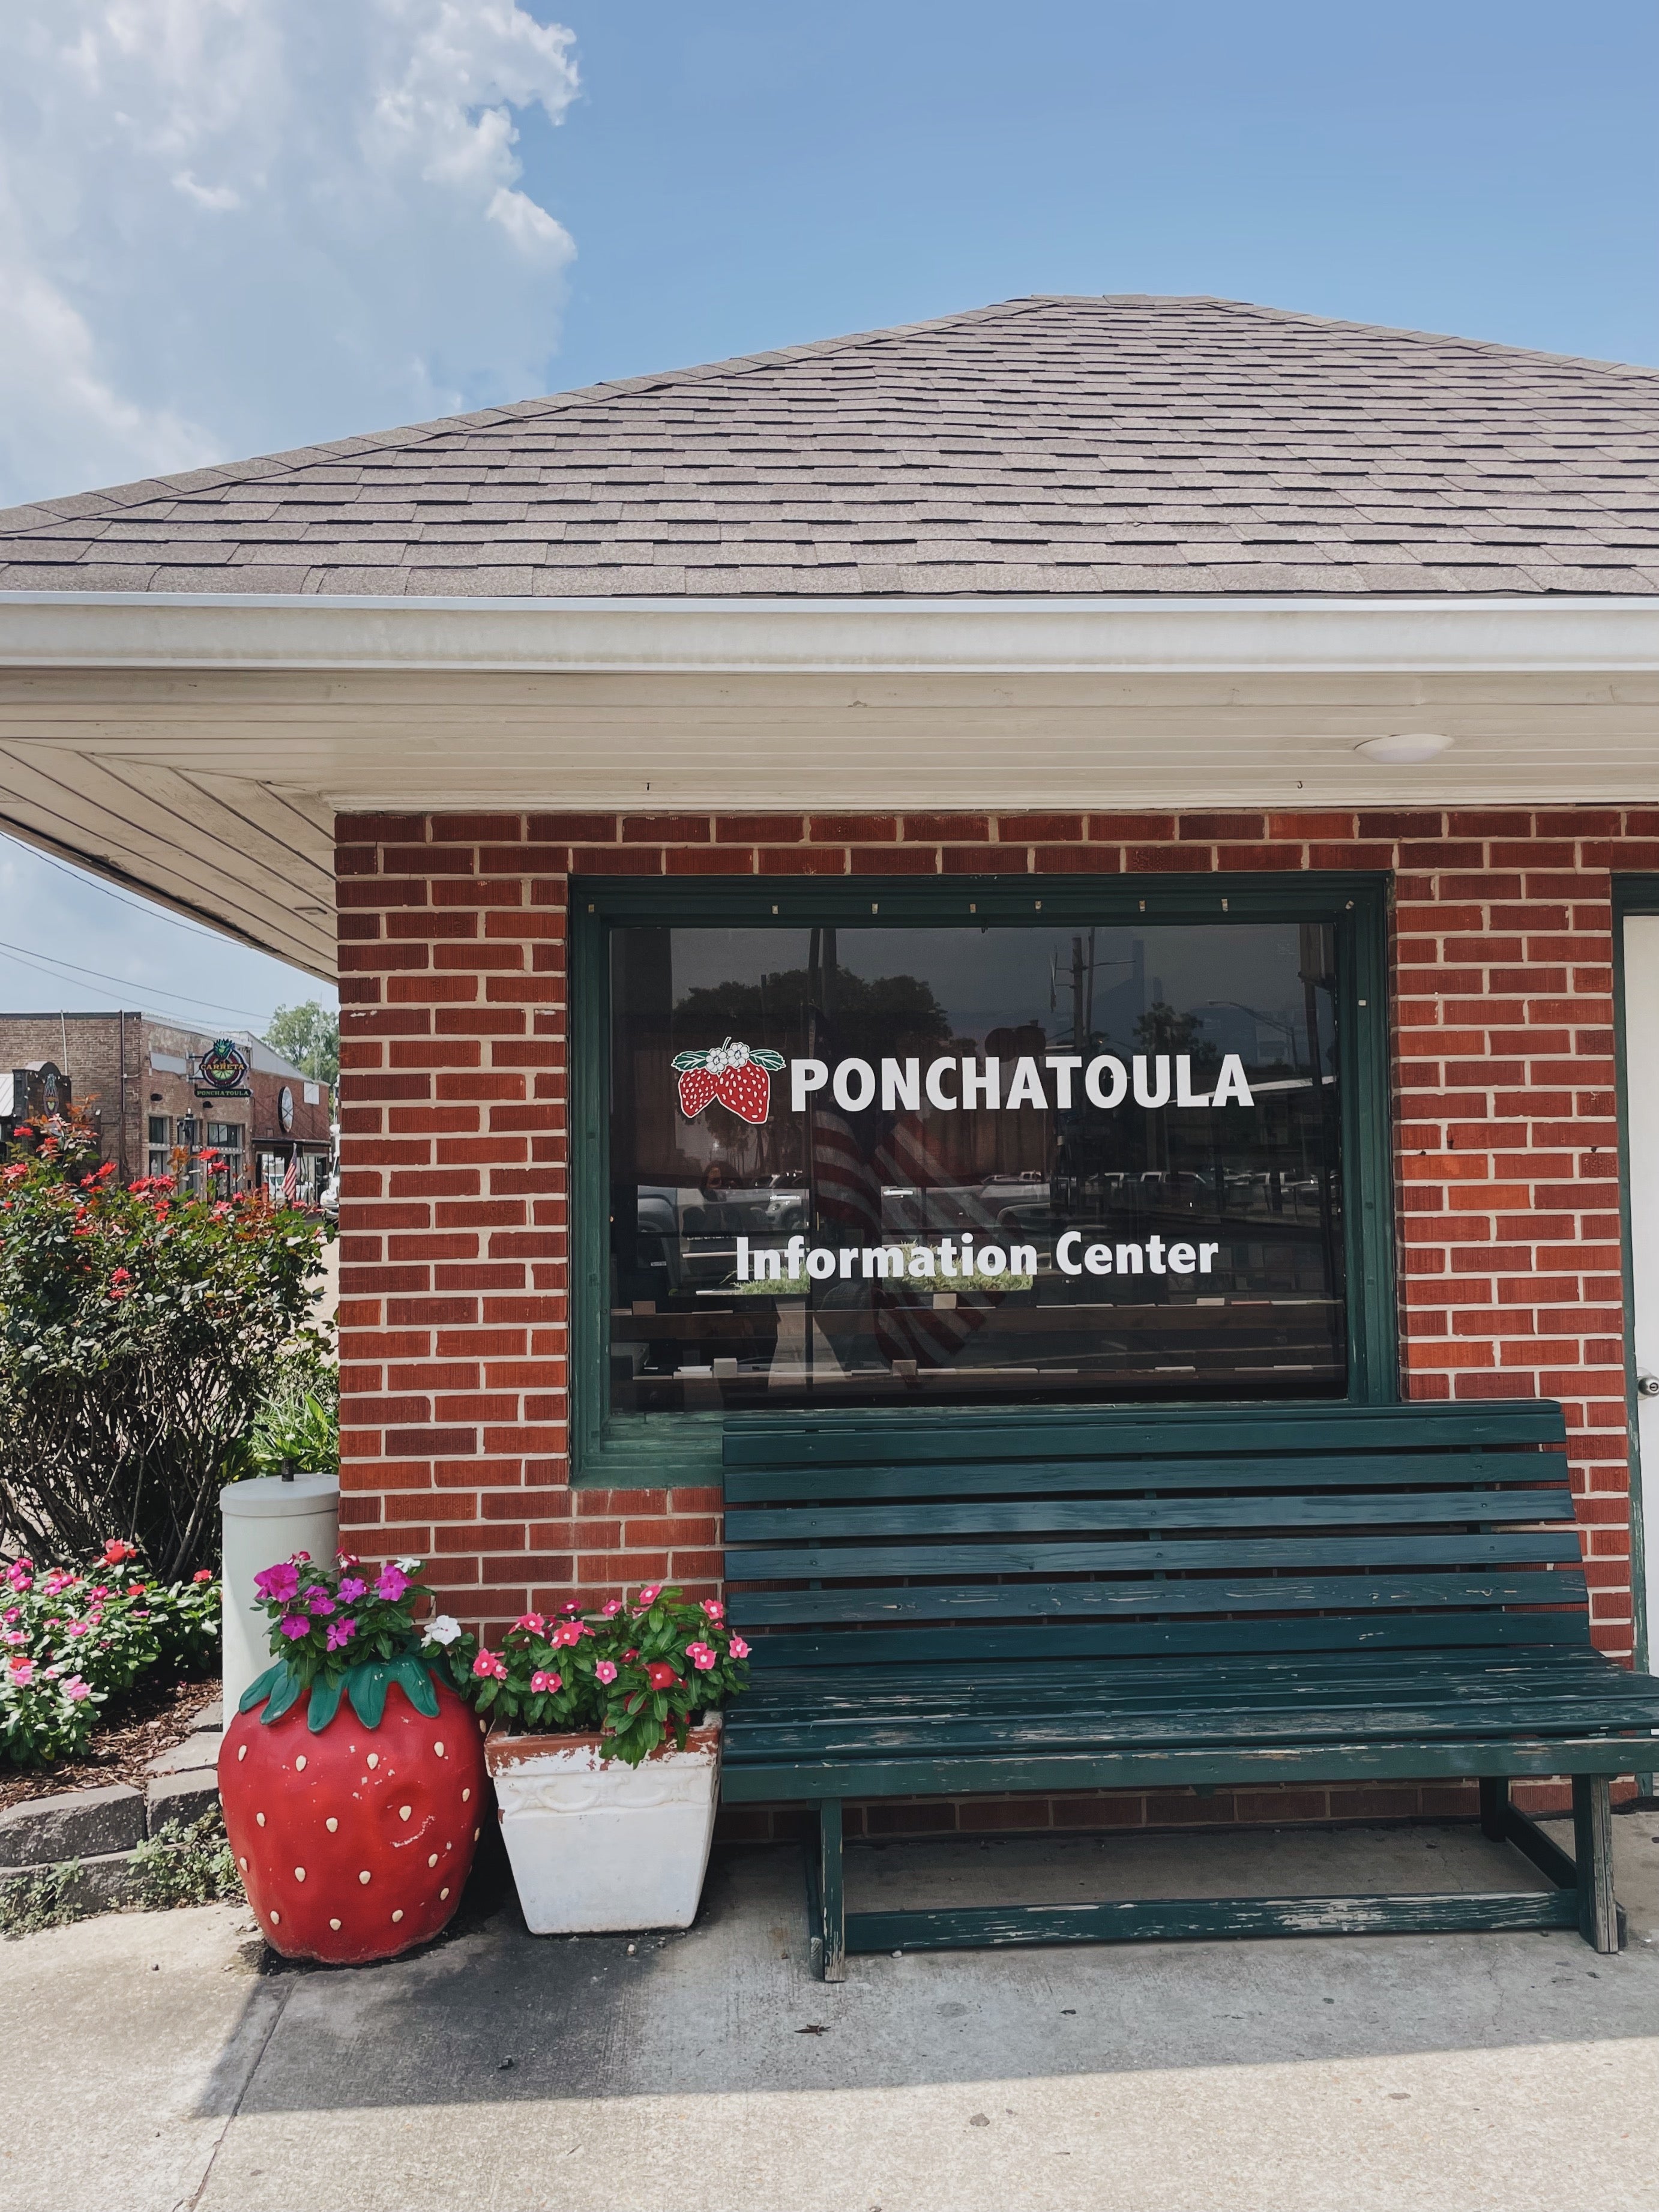 The Ponchatoula Information Center in Ponchatoula, Louisiana